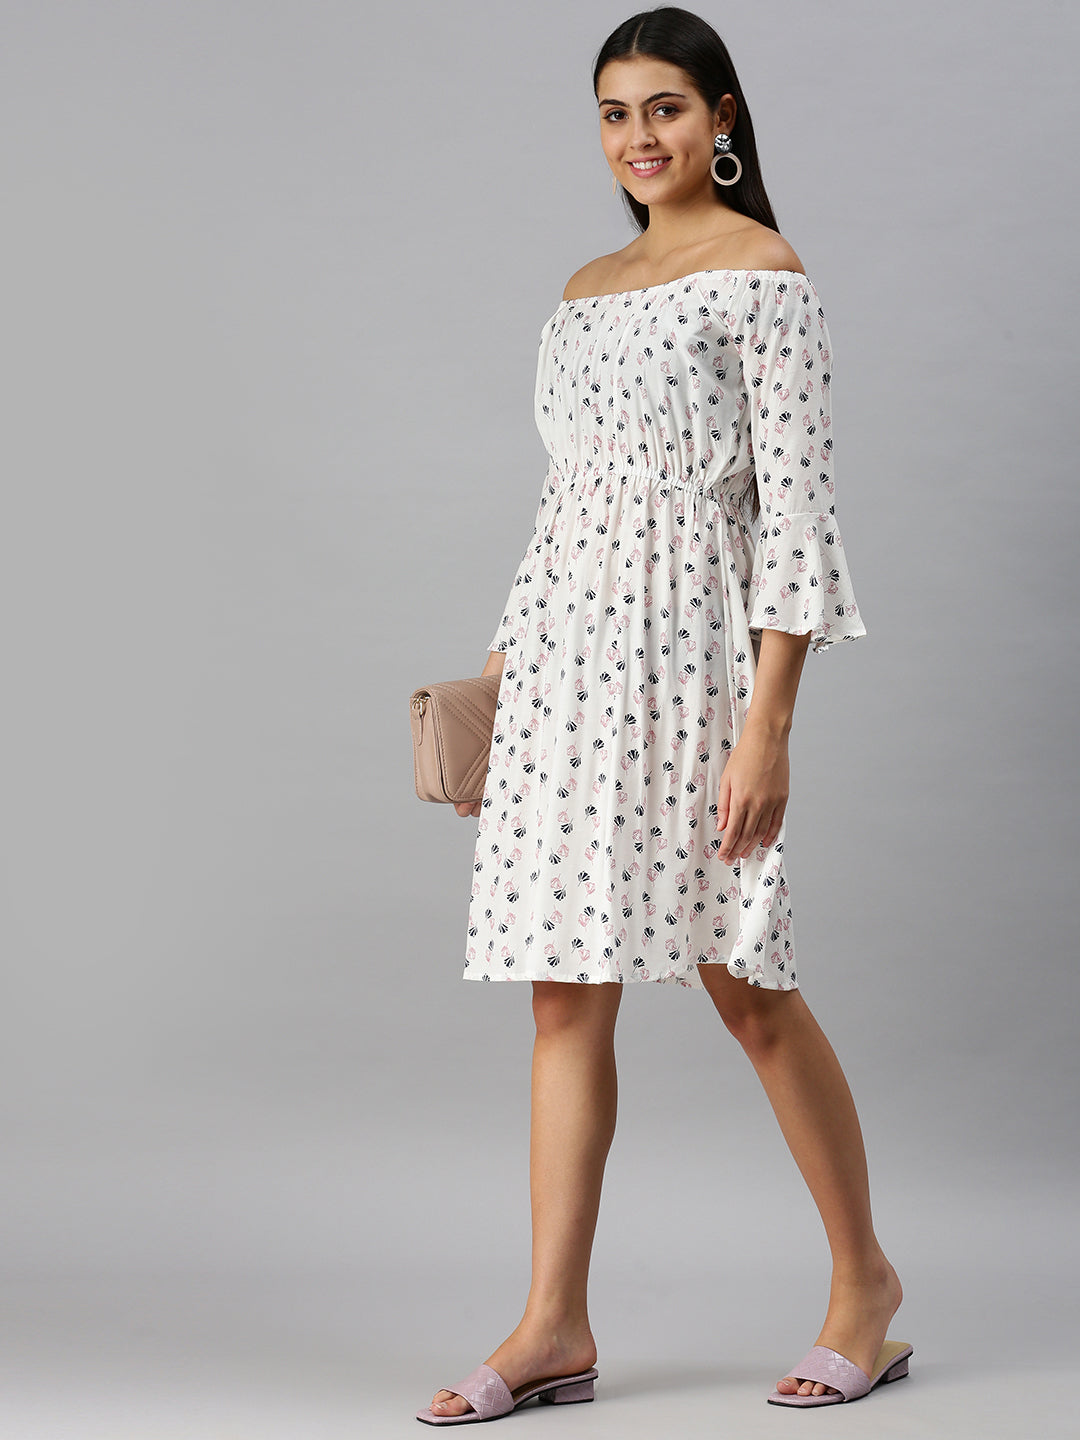 Women's A-Line White Printed Dress